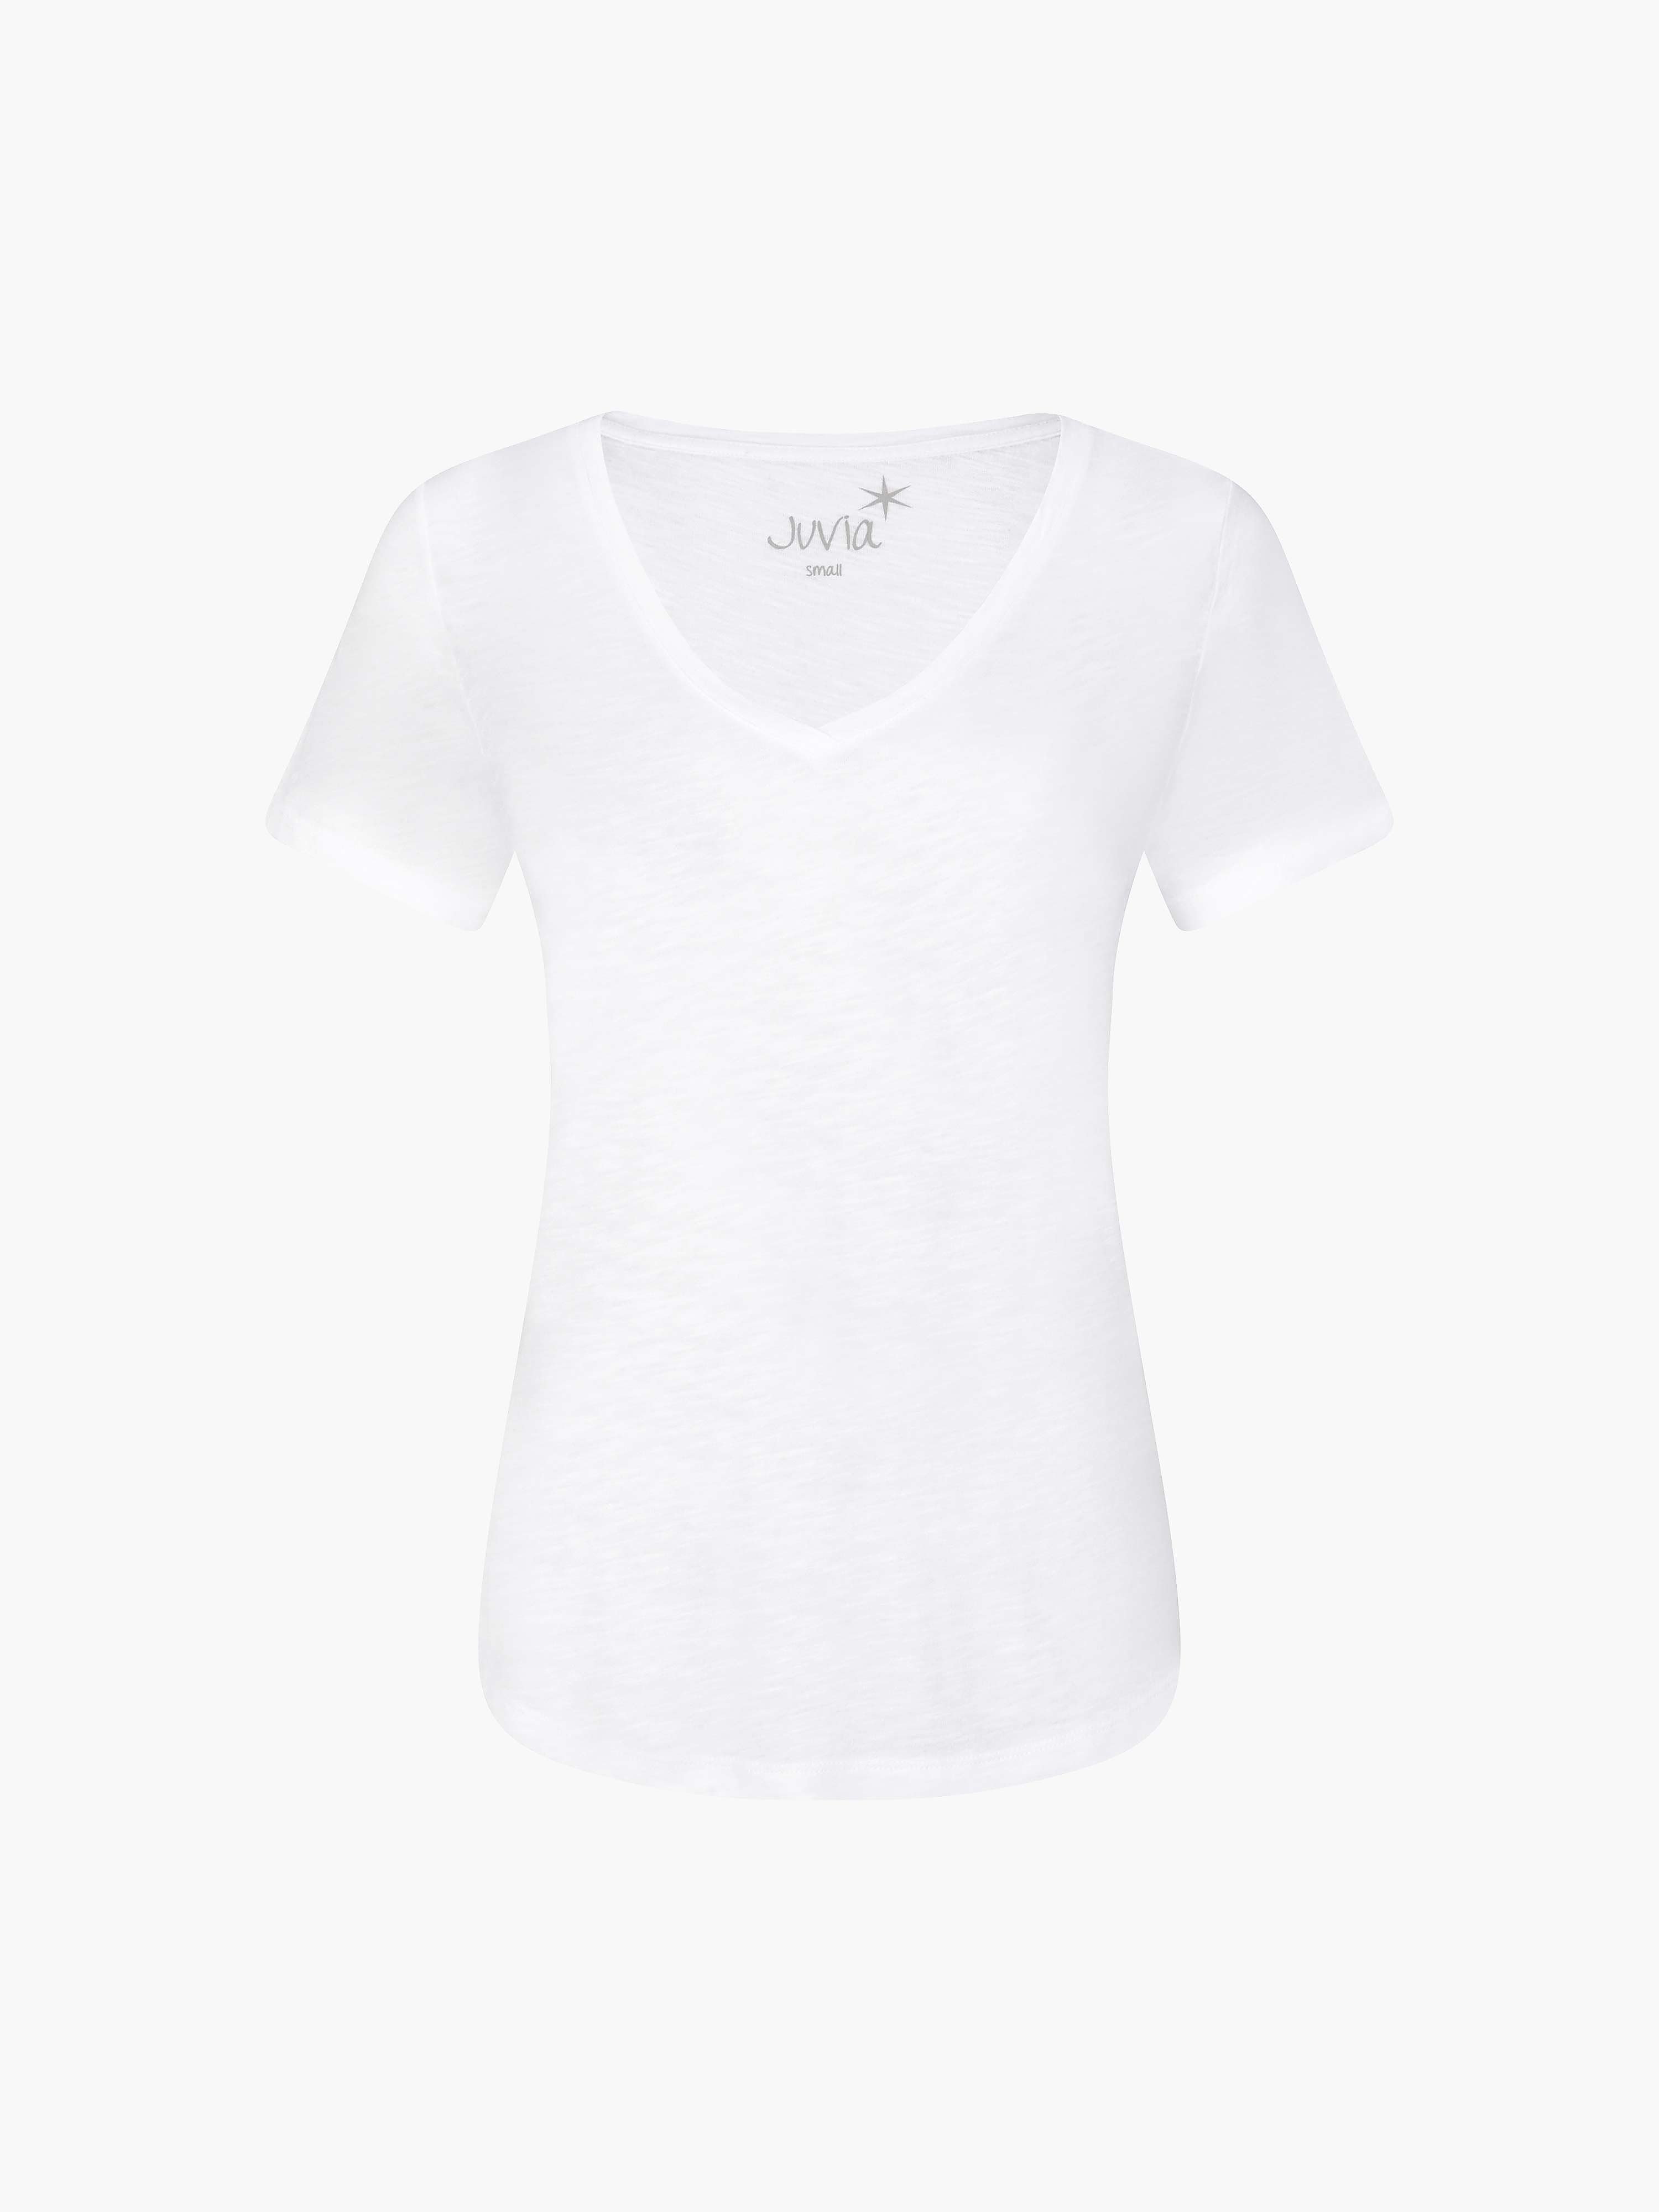 Le T-shirt manches courtes  Juvia blanc taille 46